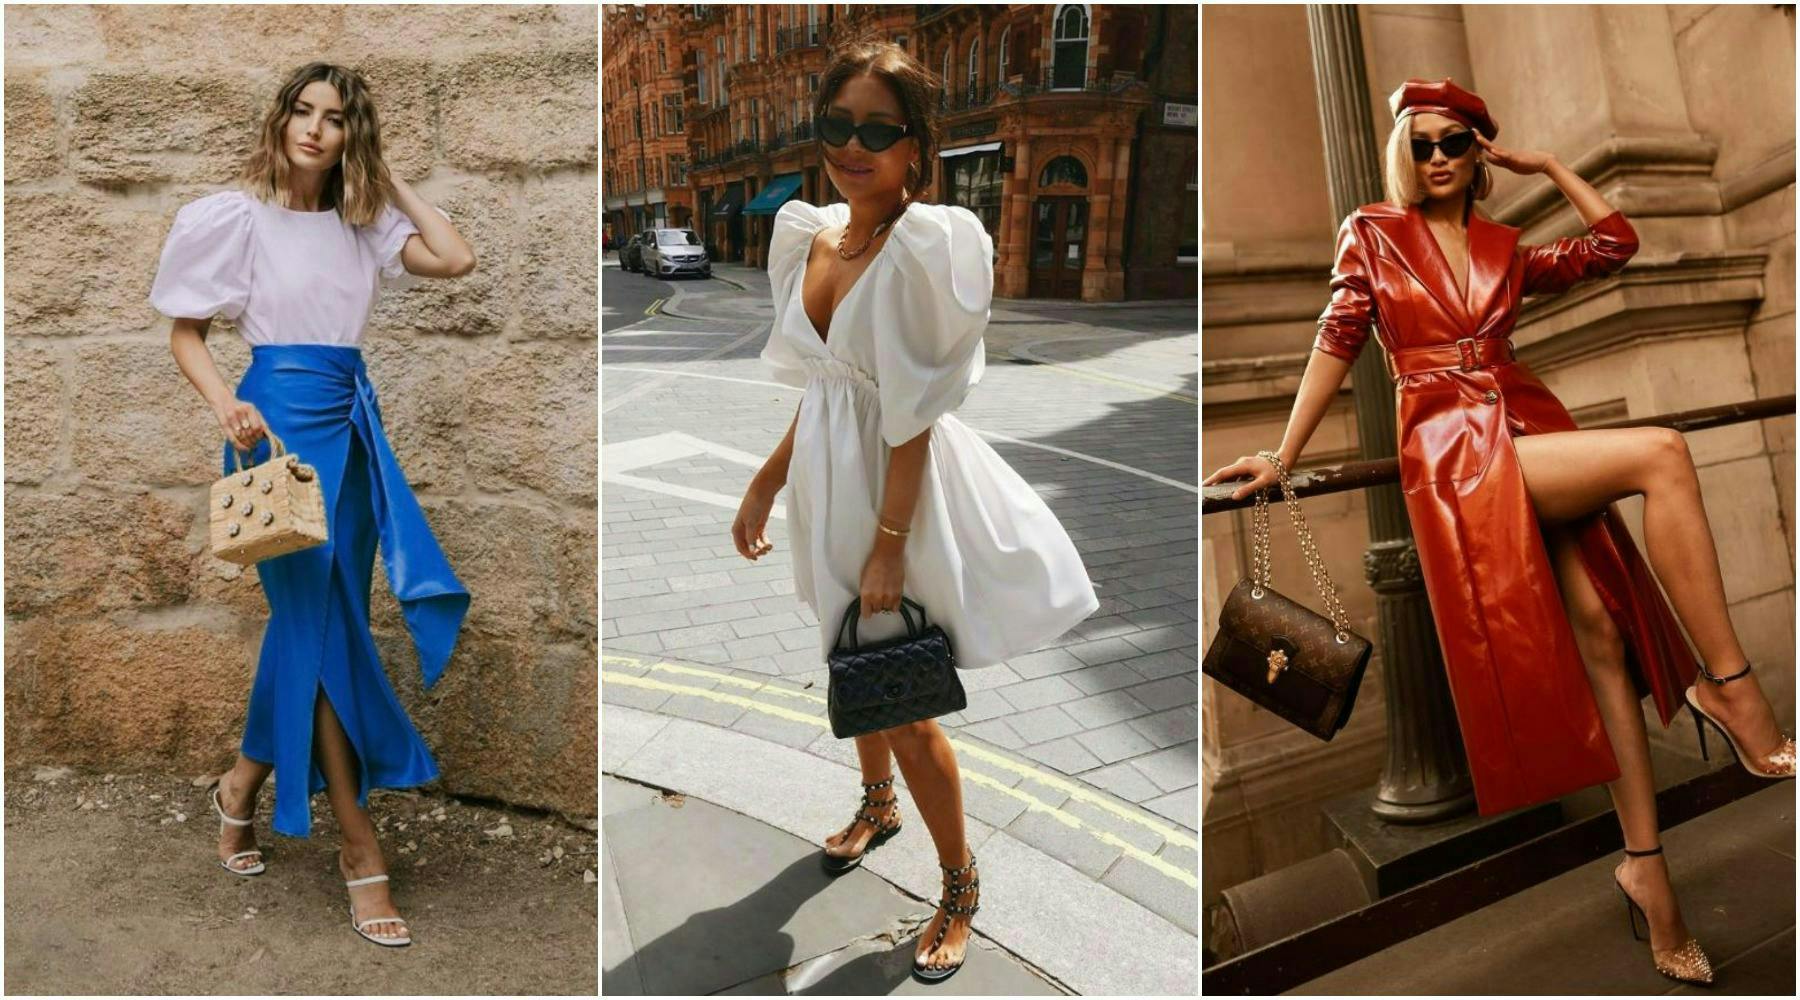 clothing apparel sunglasses accessories person handbag bag shoe footwear purse